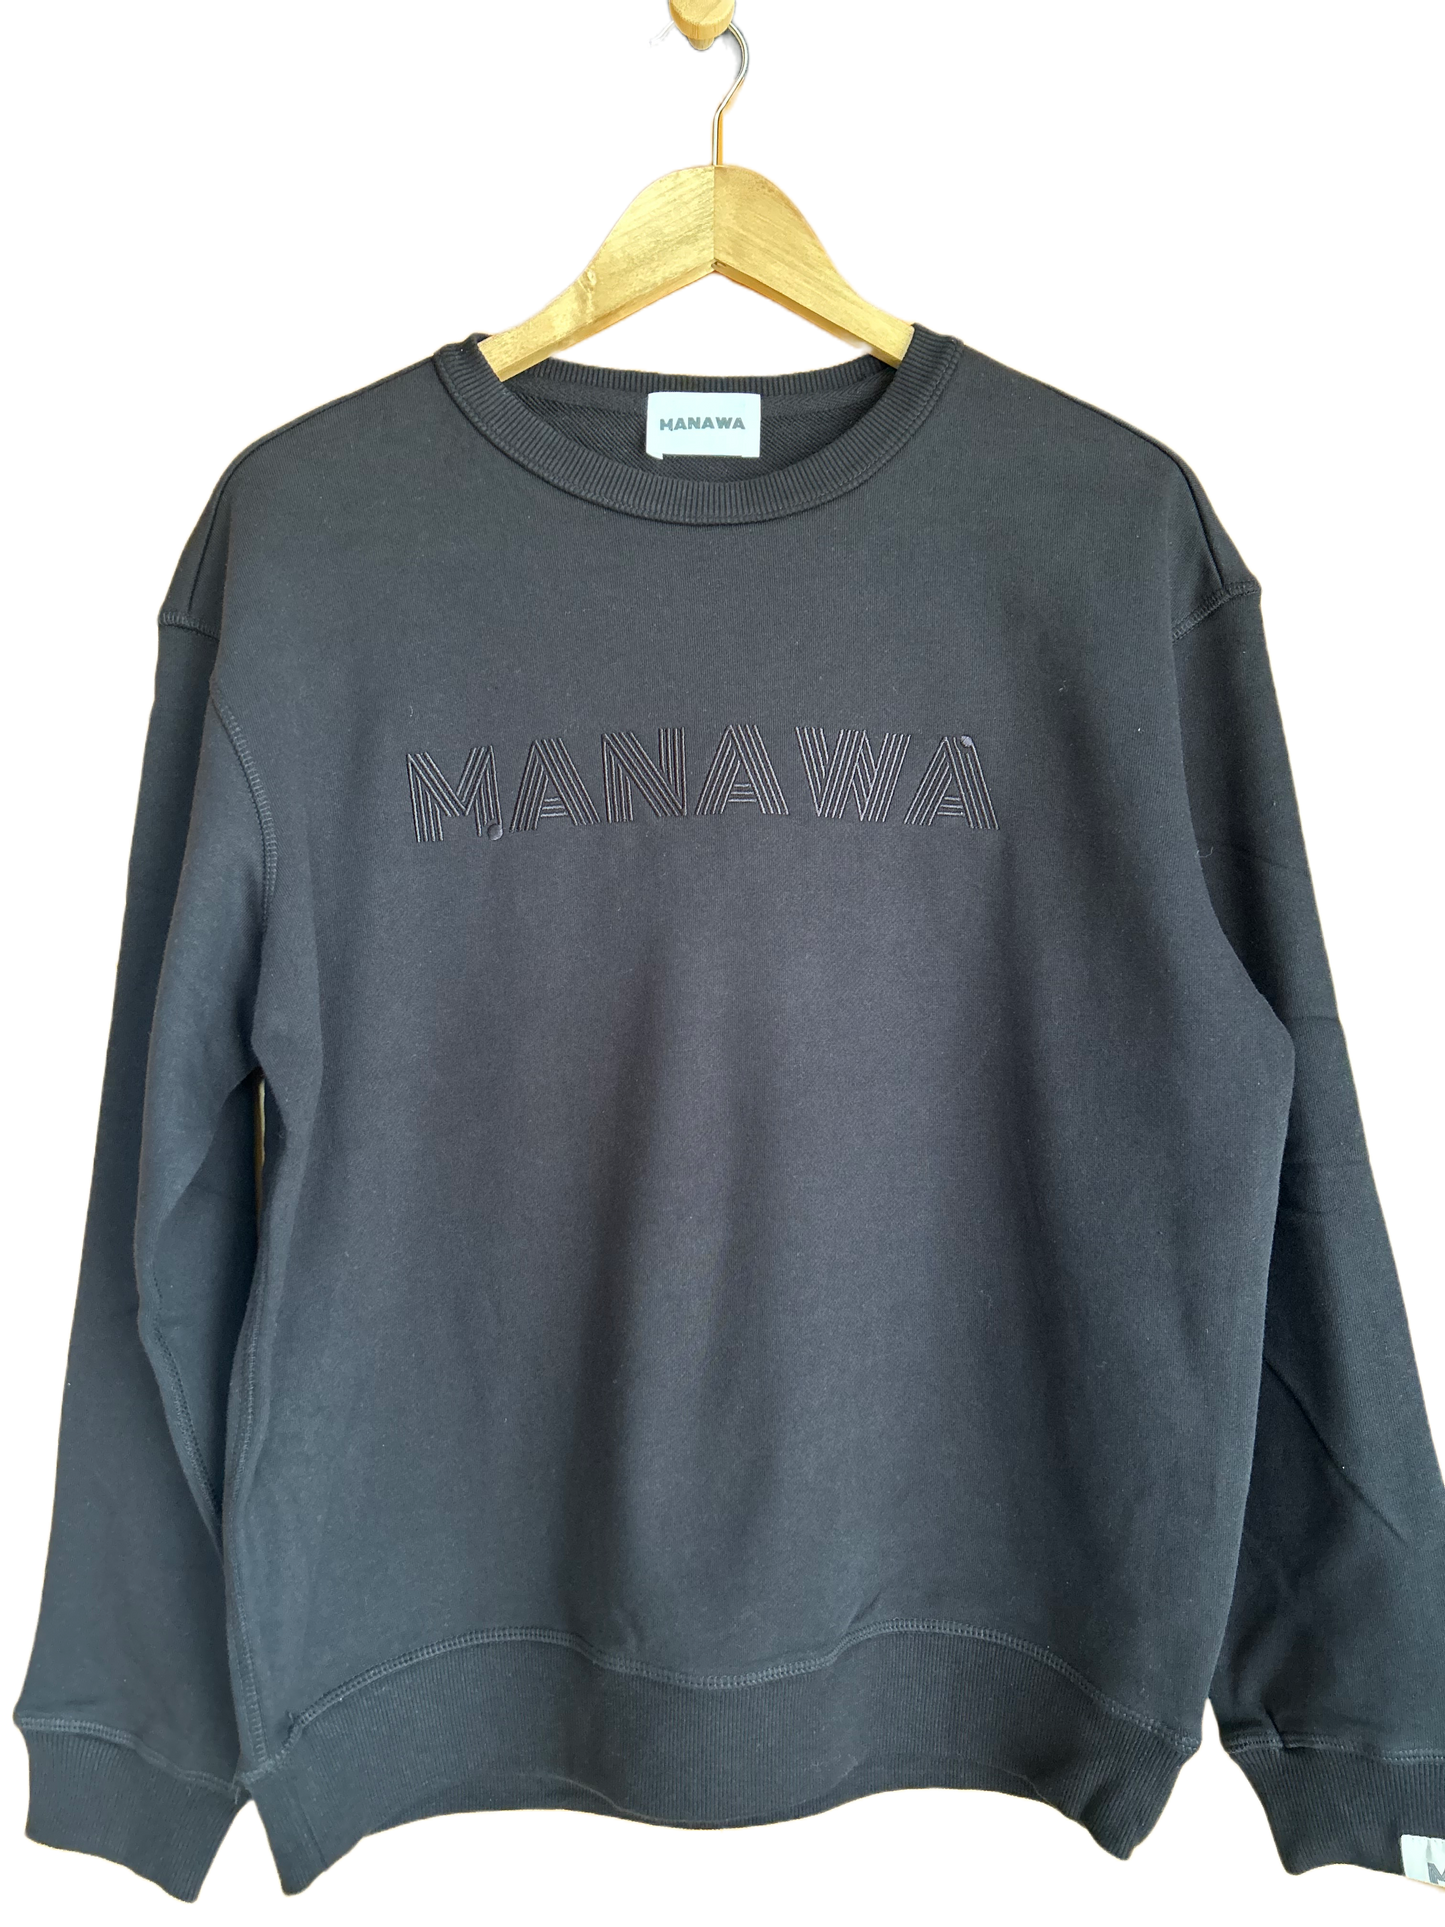 MANAWA crew - black embroidery